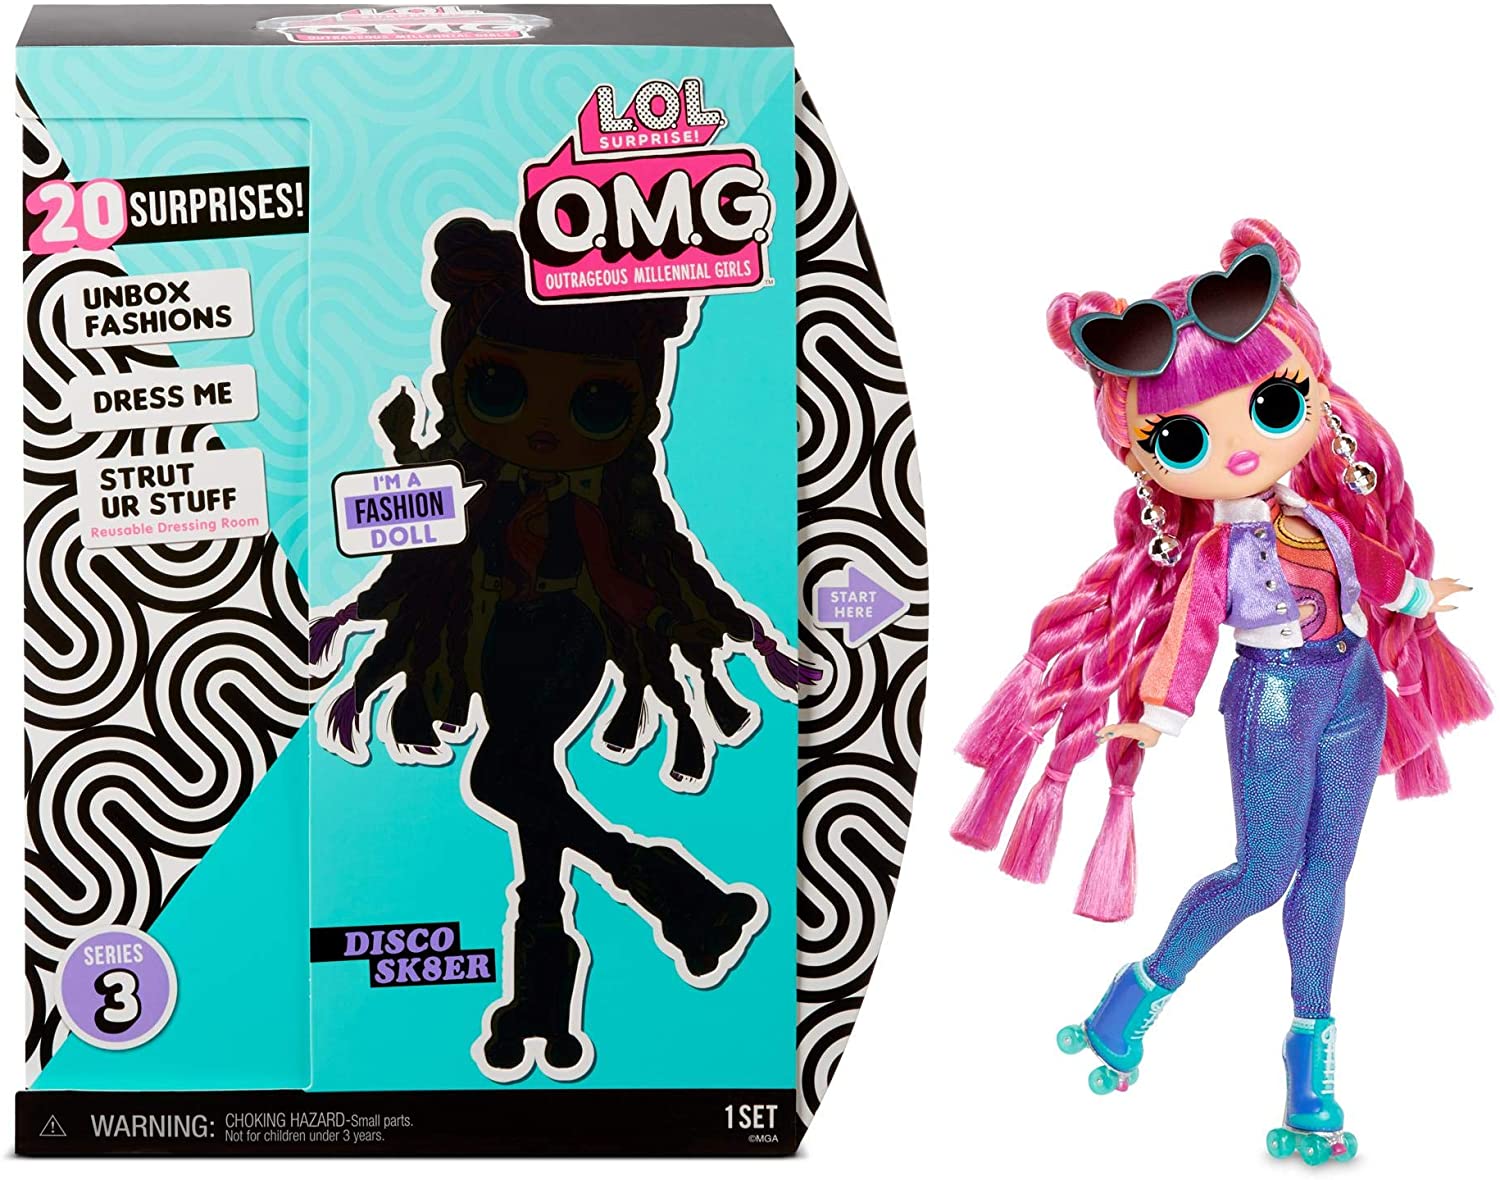 MGA Entertainment, 567196E7C, L.O.L. Surprise OMG Doll Series, 3-Disco Sk8